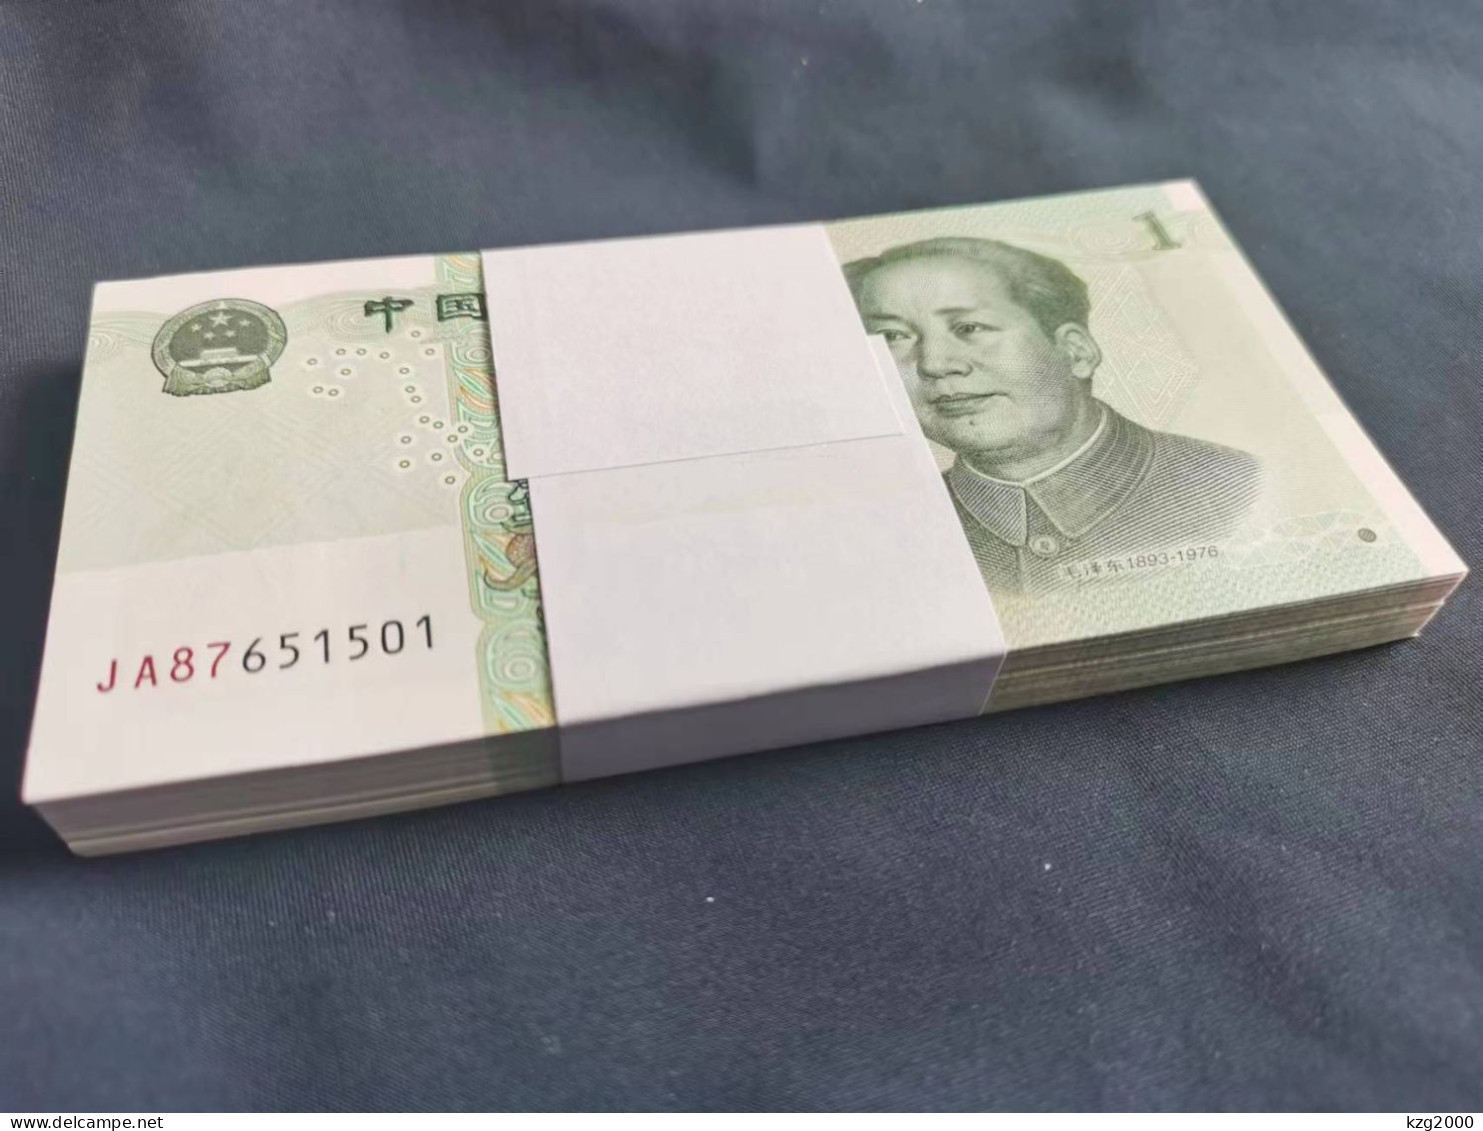 China 2019 Paper Money RMB  1 Yuan  Banknote  100 Banknotes  Original Factory Bundled Continuous Numbering (1-100) - China